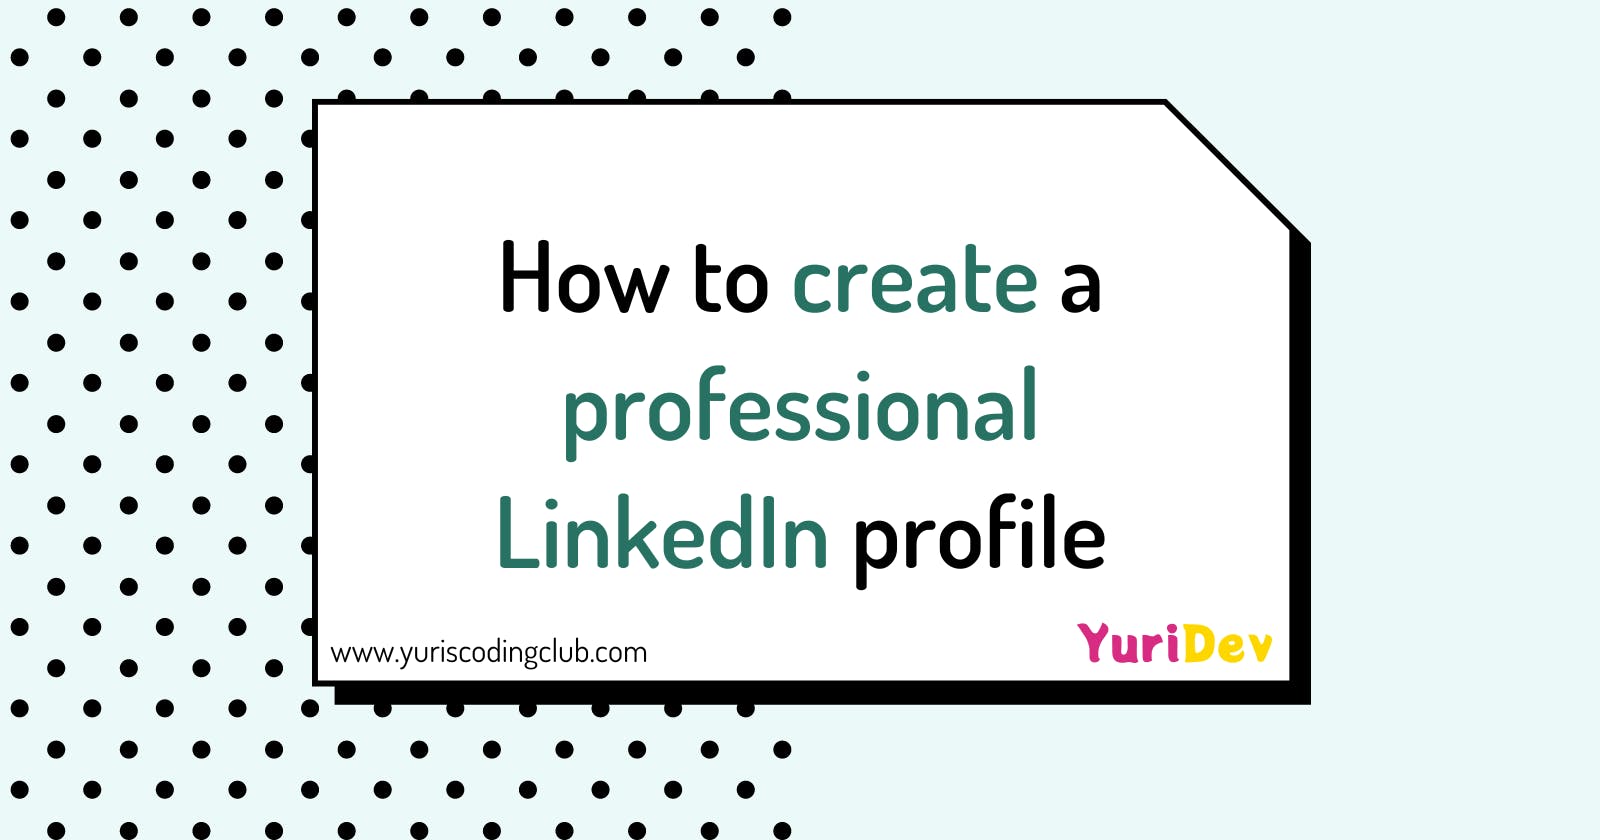 How to create a professional LinkedIn profile